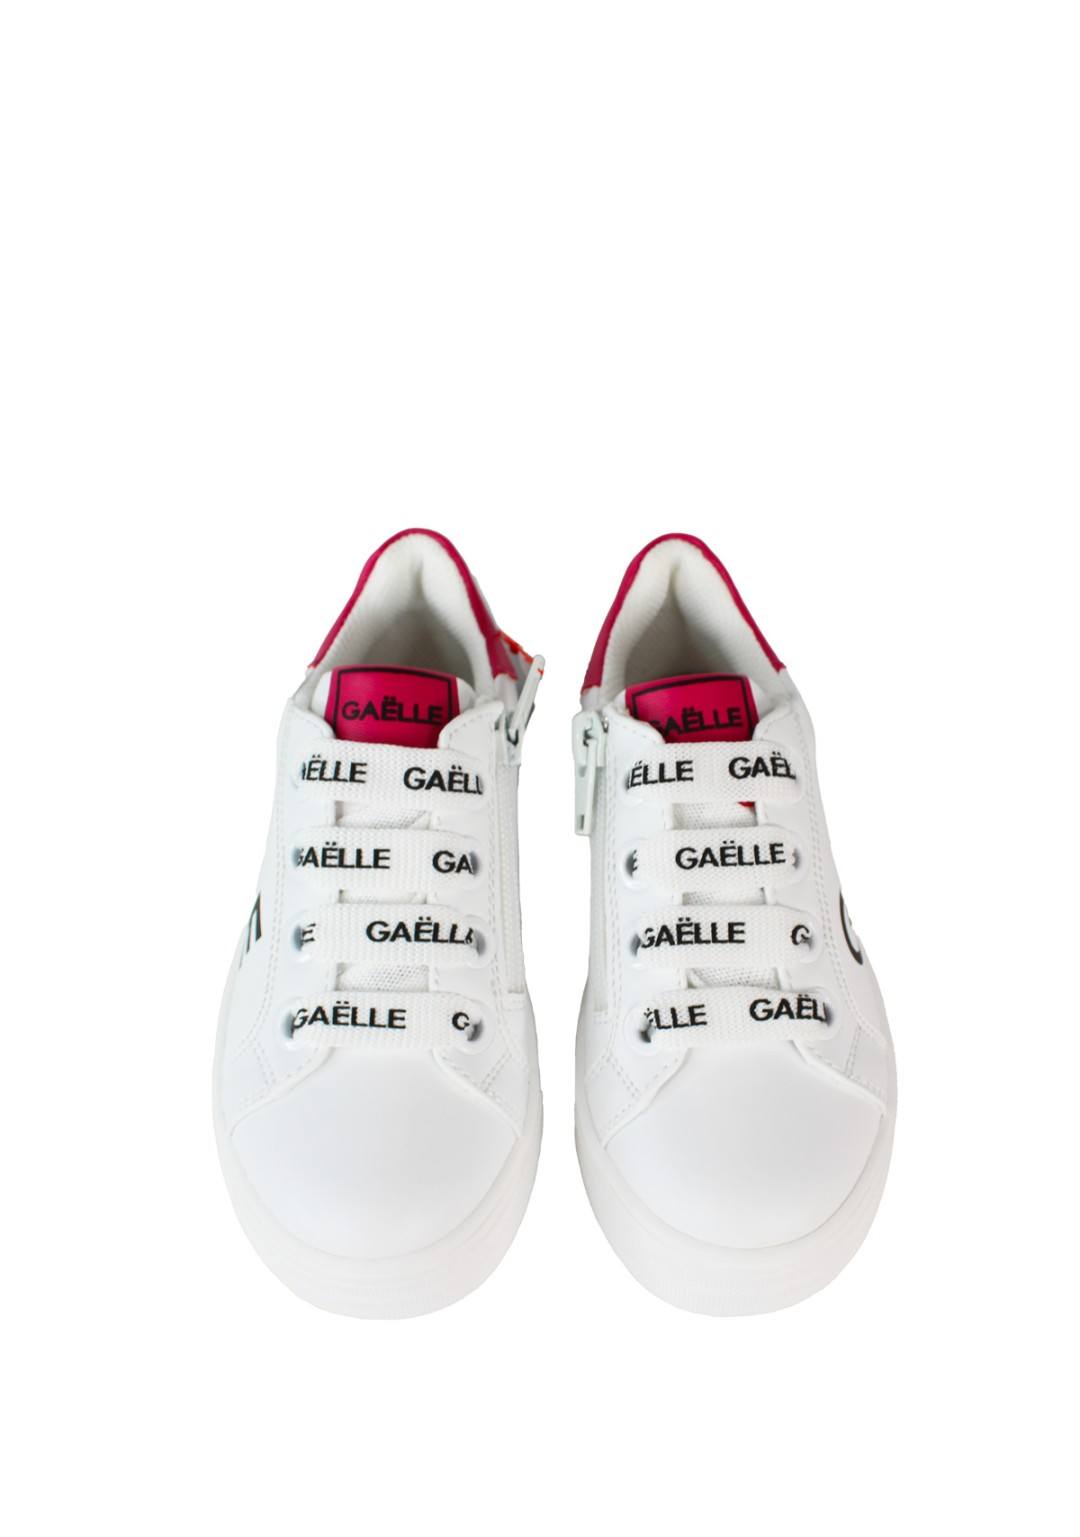 GAëLLE PARIS - Sneaker Logata - Bambine e ragazze - G -1810